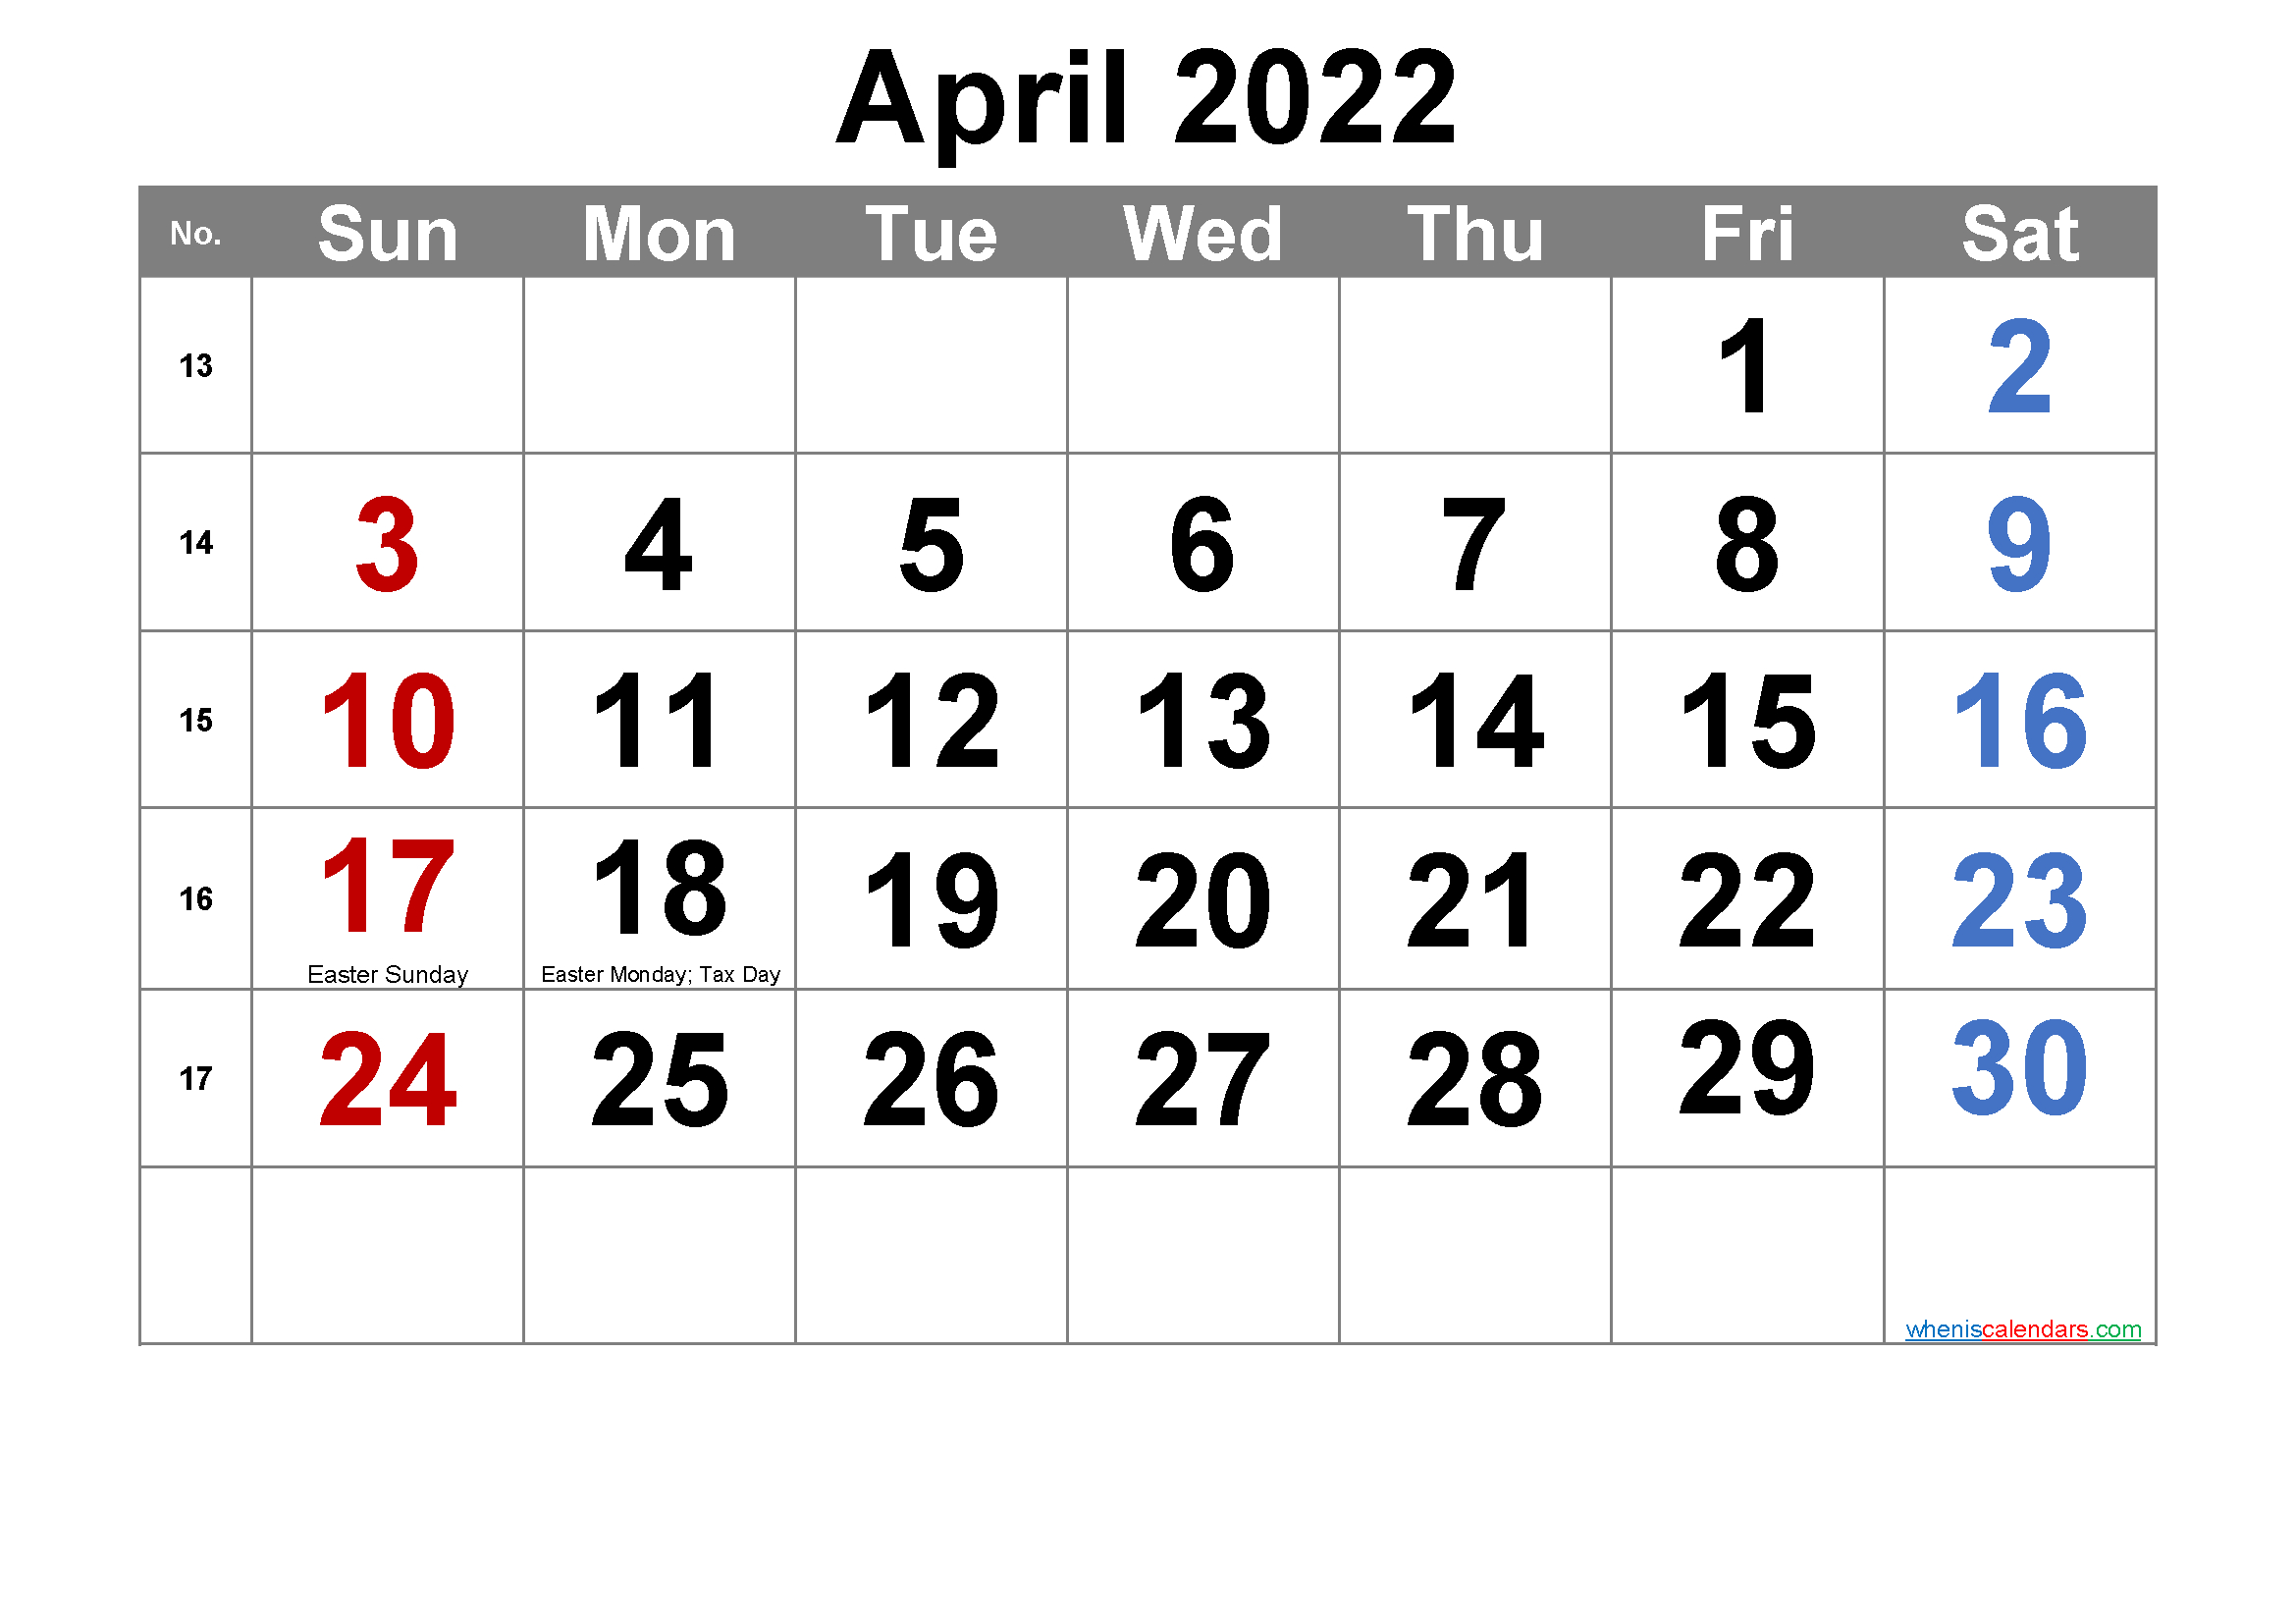 Calendar For March And April 2022 With Holidays - Calendar  Calendar 2022 January To April